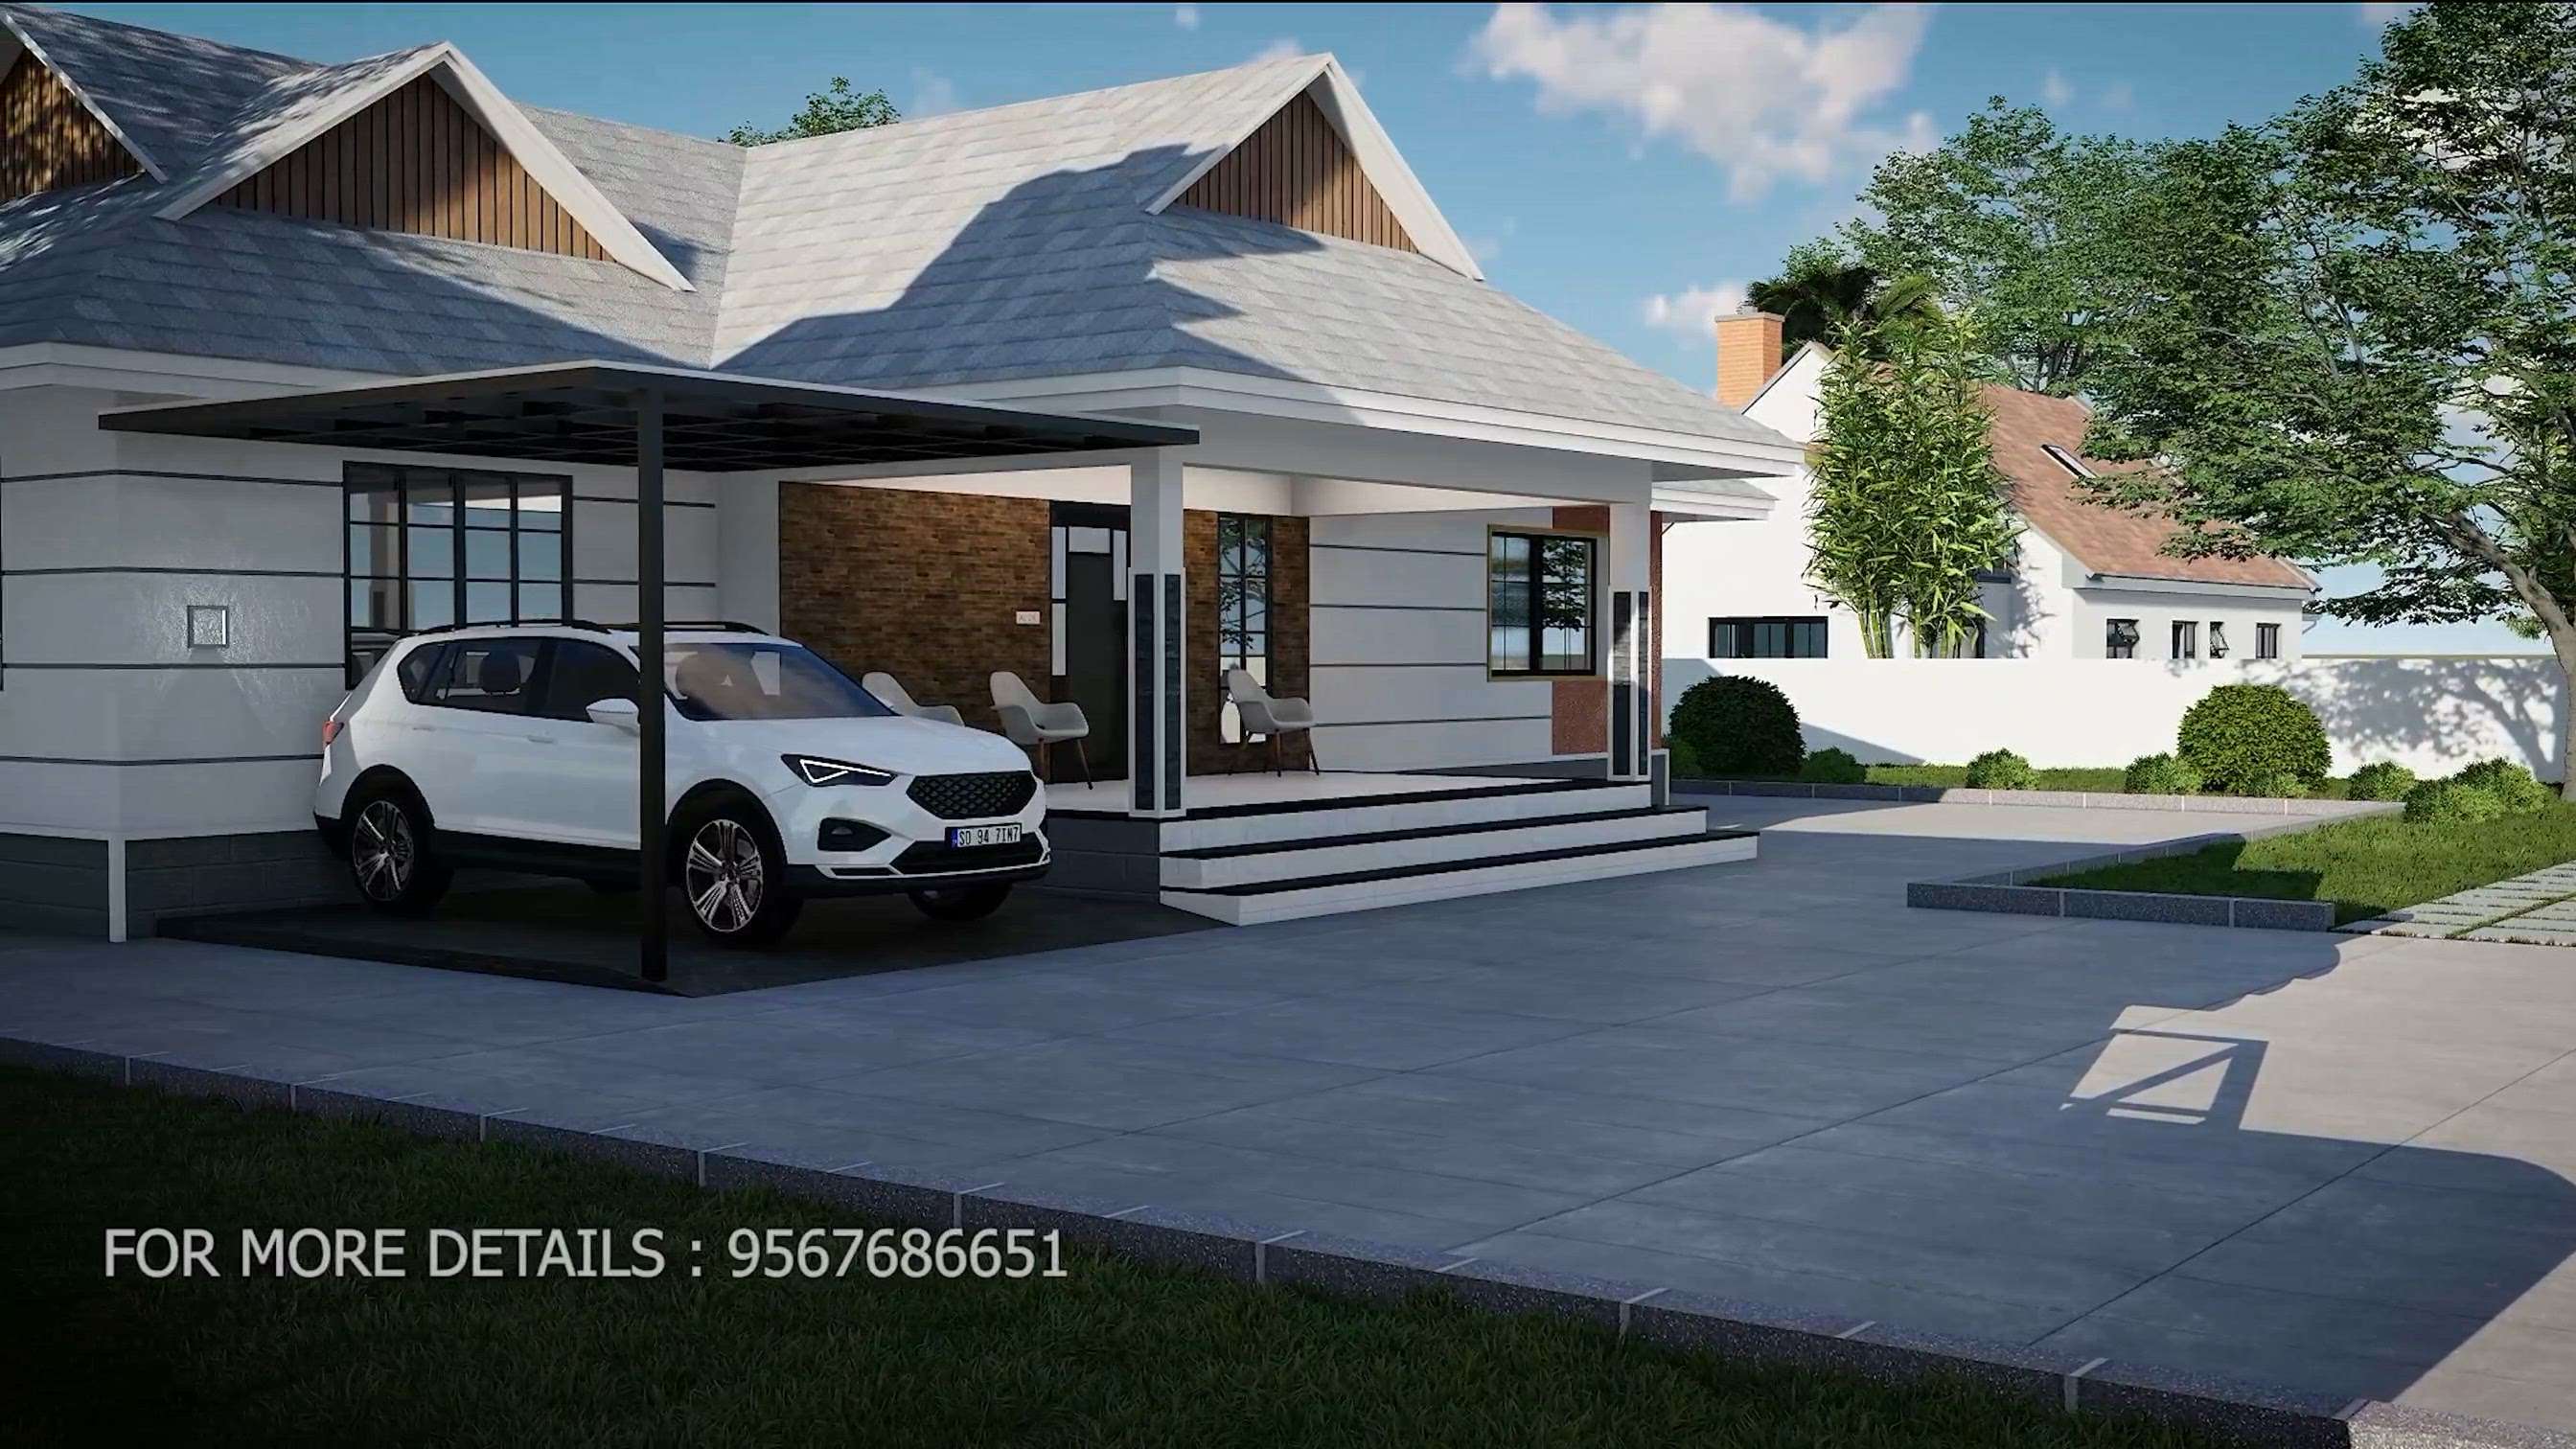 3d visualisation home exterior design kerala  #LandscapeIdeas  #exterior_Work  #outdooryard  #stilt+4exteriordesign  #exteriorvideo  #exteriorsofinstagram  #ElevationHome  #ElevationDesign  #CivilEngineer